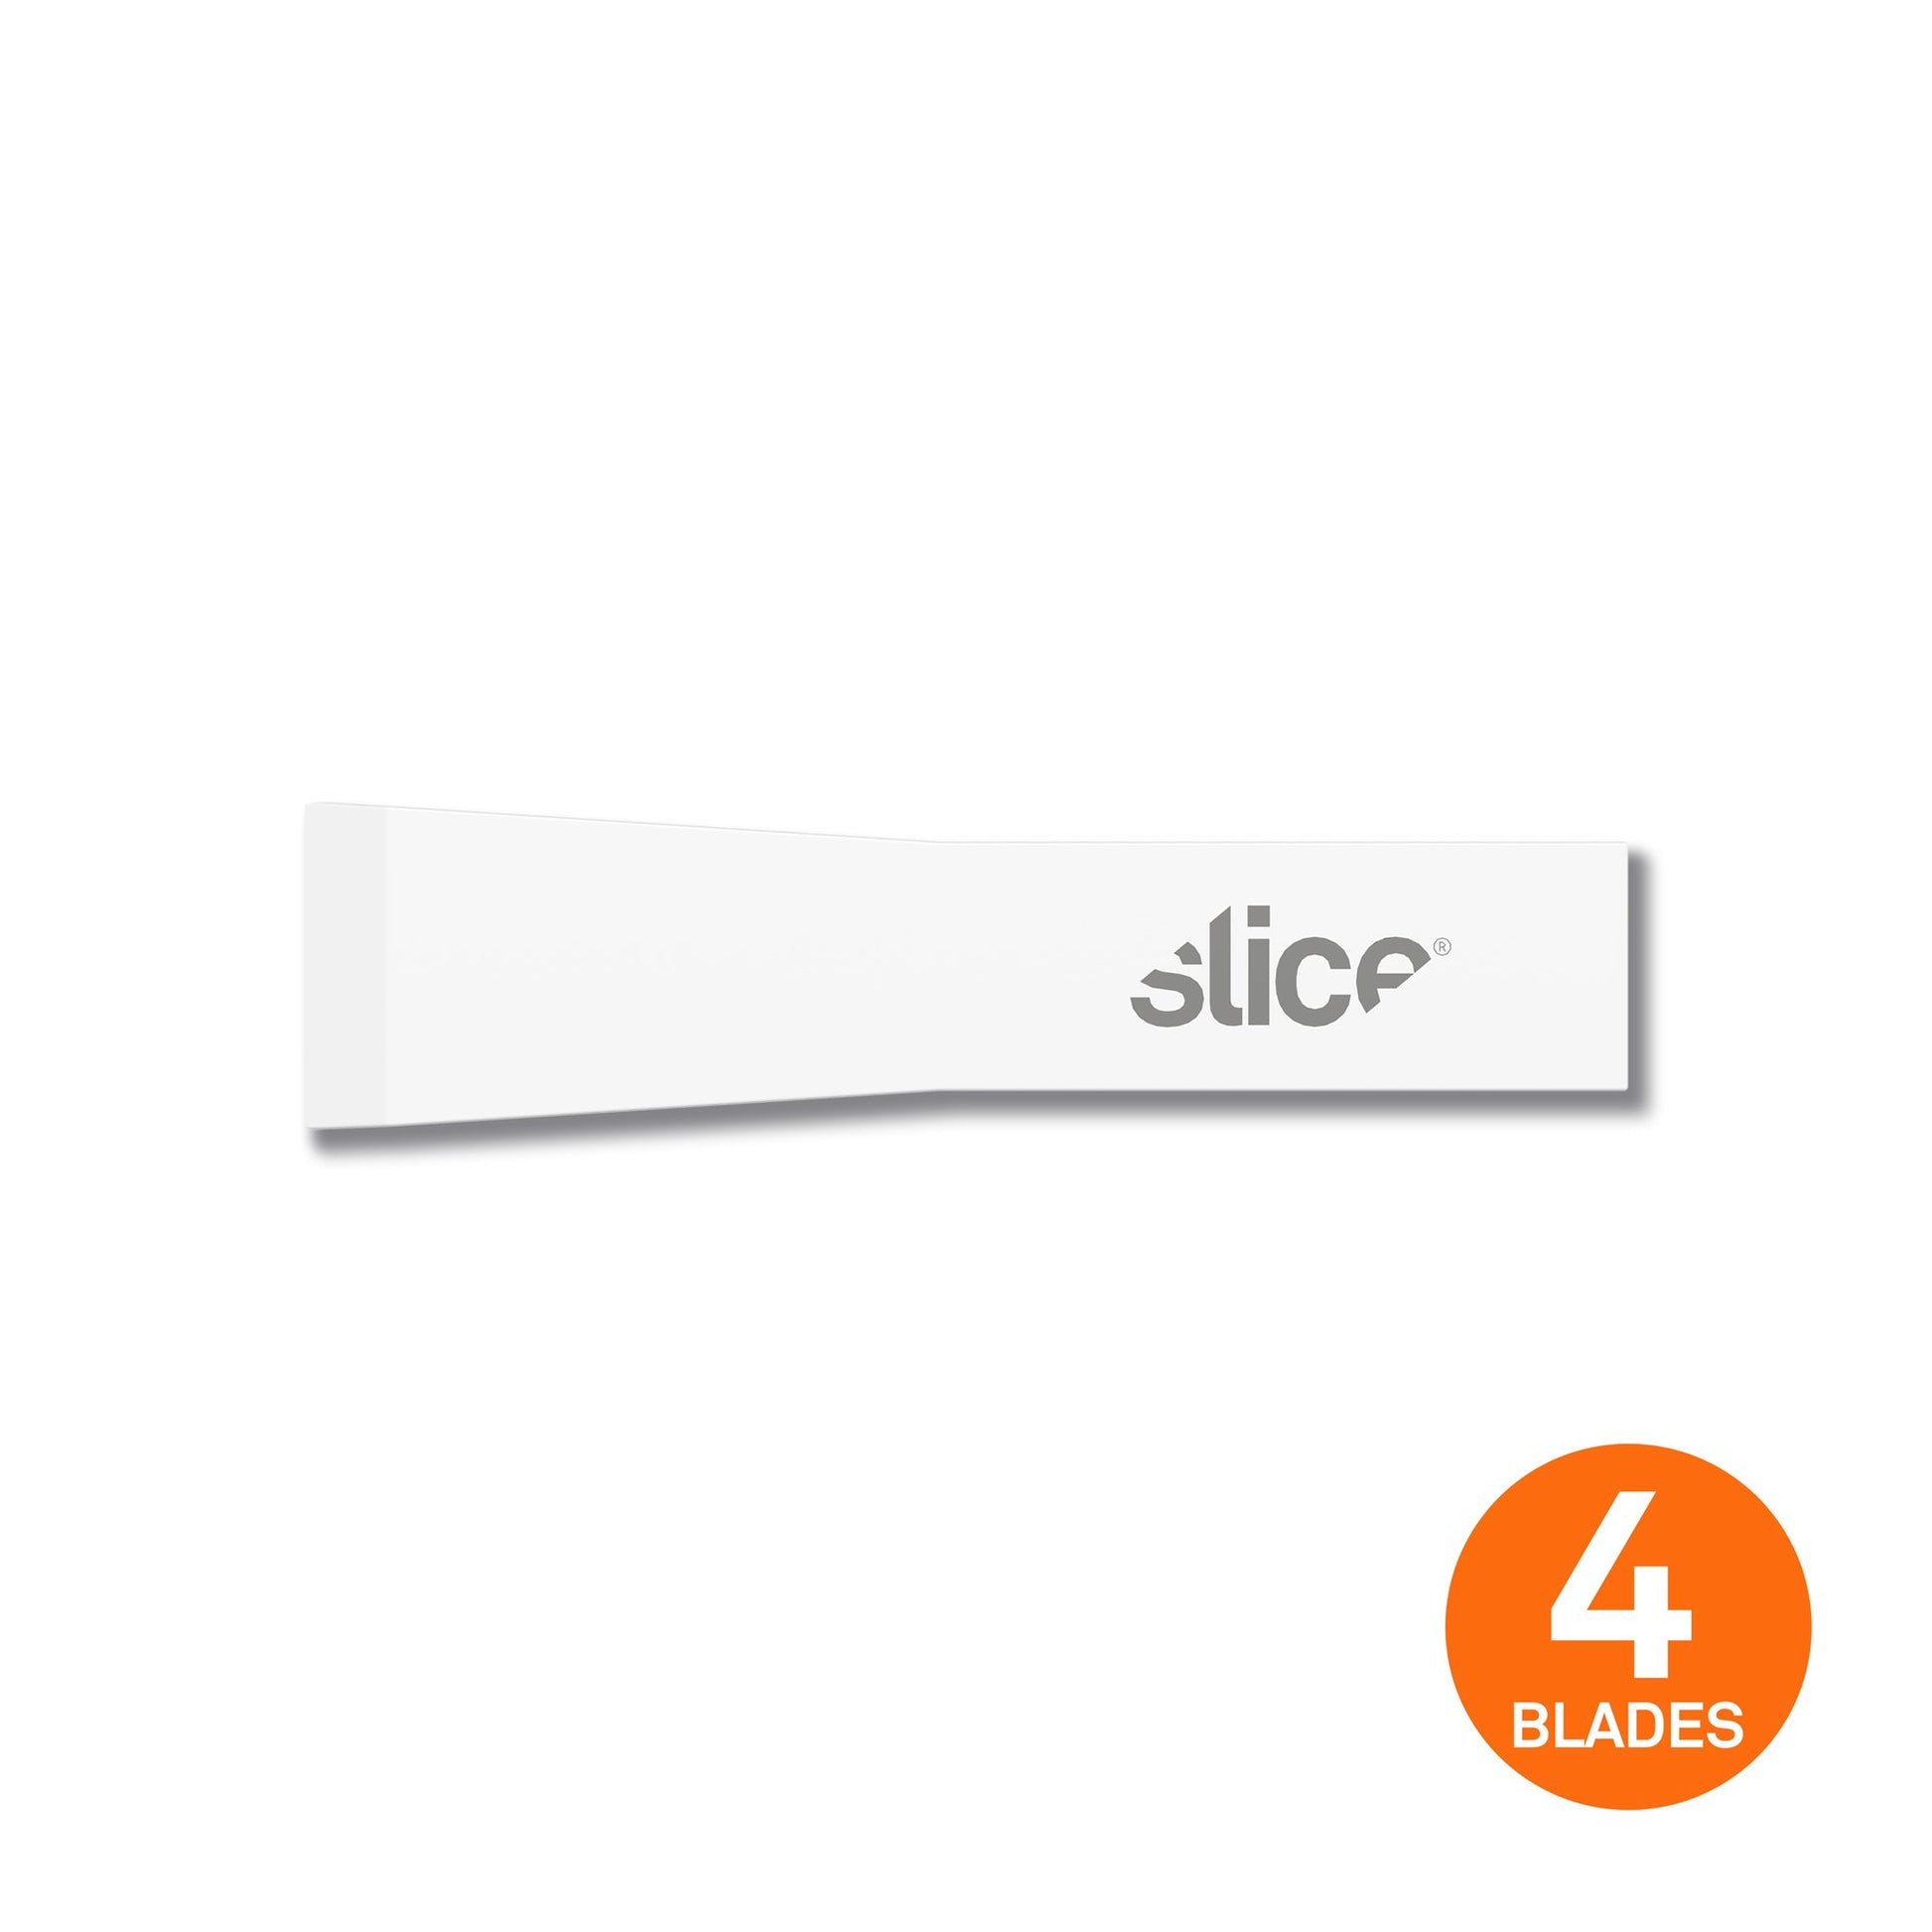 The Slice® 10534 Chisel Blades